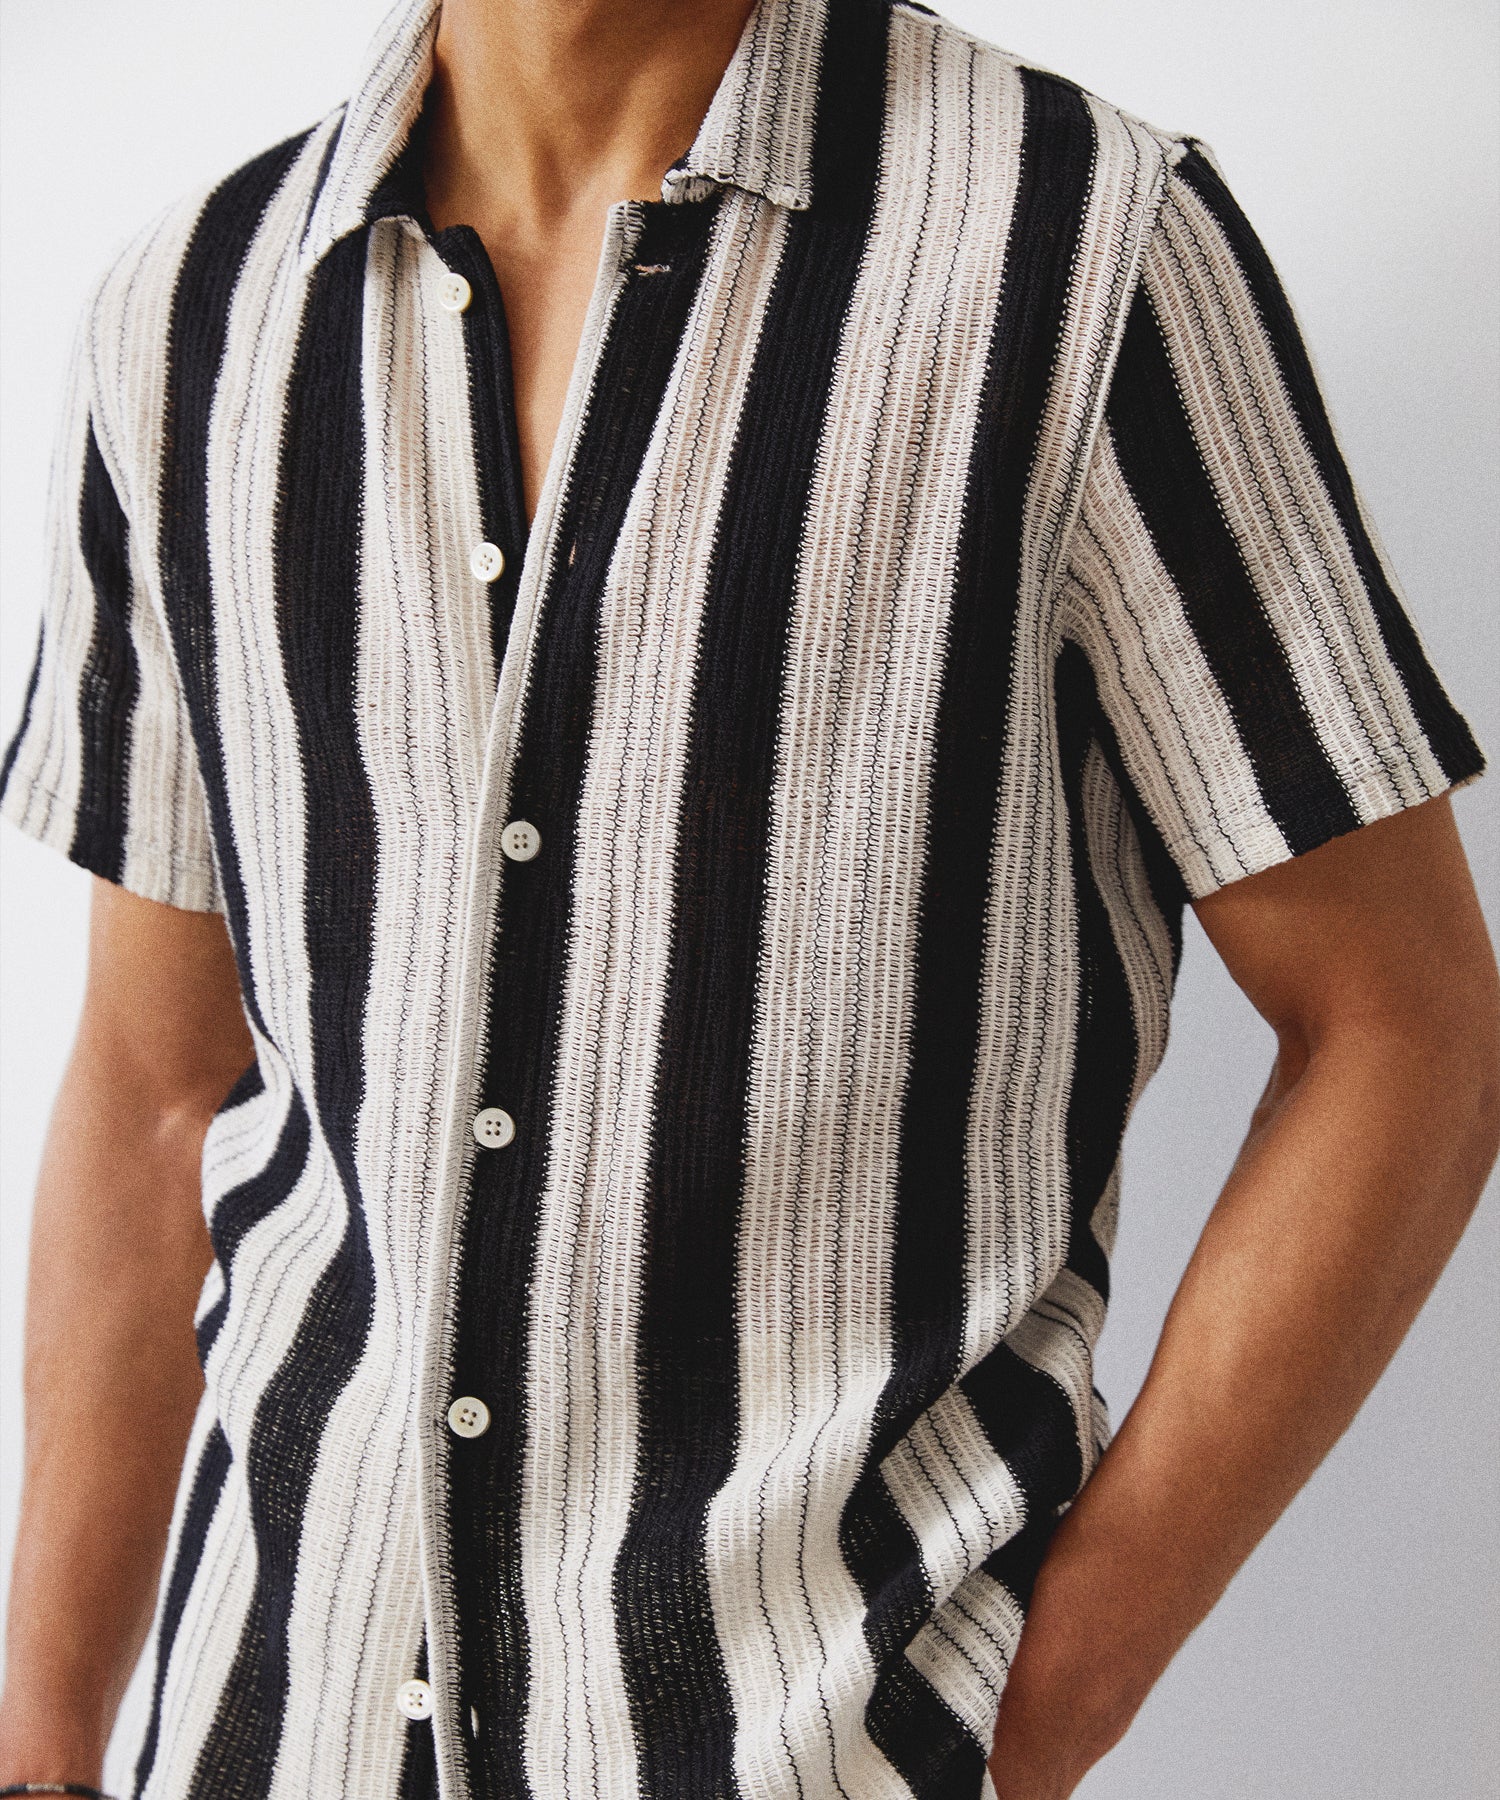 black and white striped dress shirt